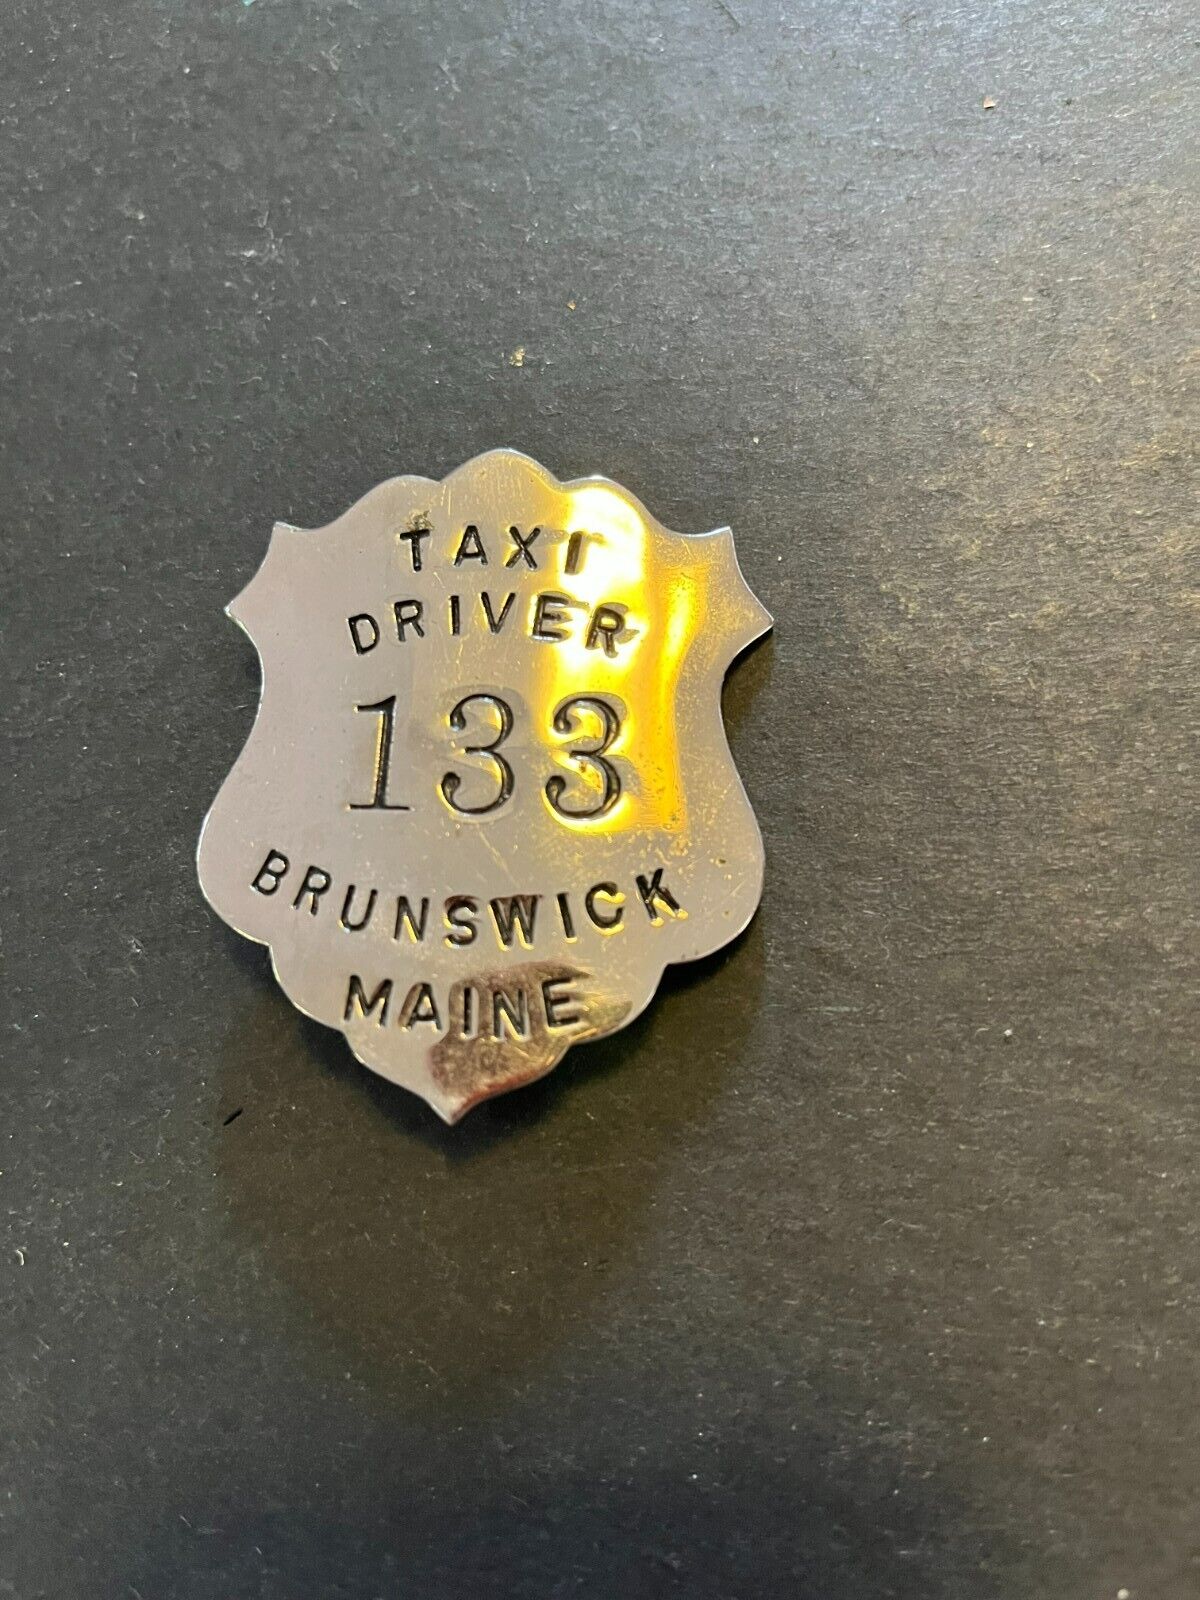 Beautiful Brunswick, Maine undated Taxi Driver badge, #133 w/original pin intact